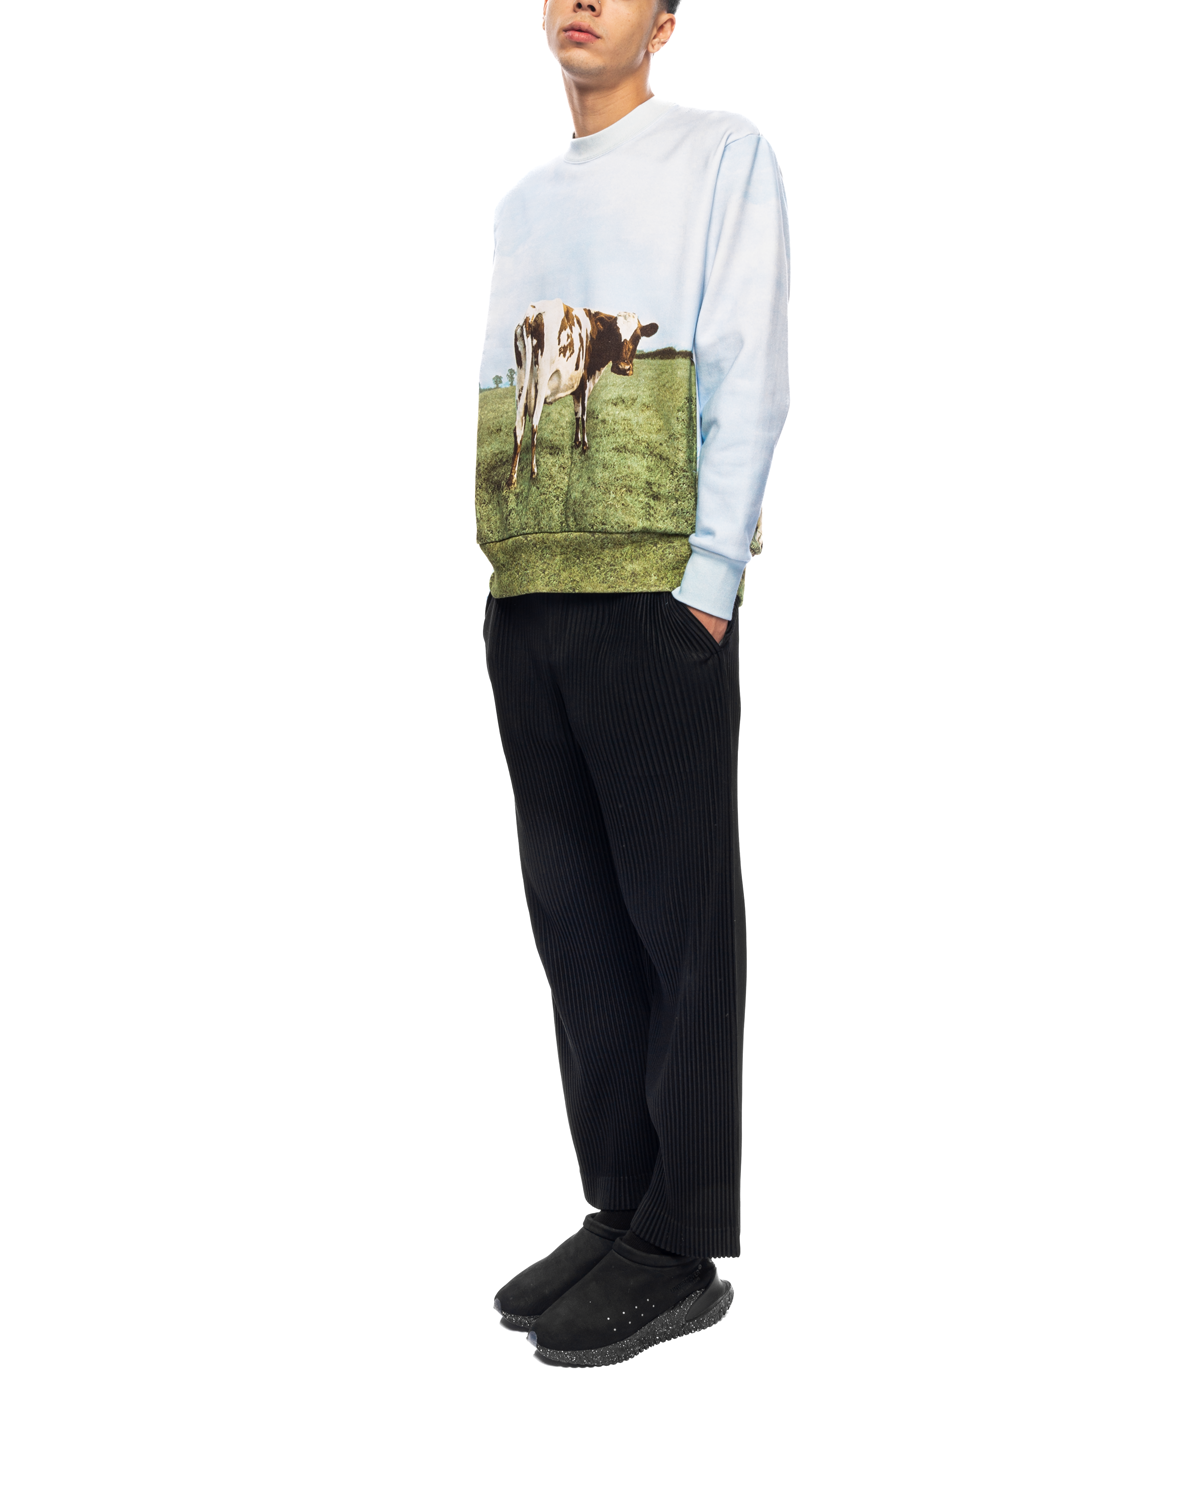 UC1C4805-1 'Atom Heart Mother' Cotton Sweatshirt